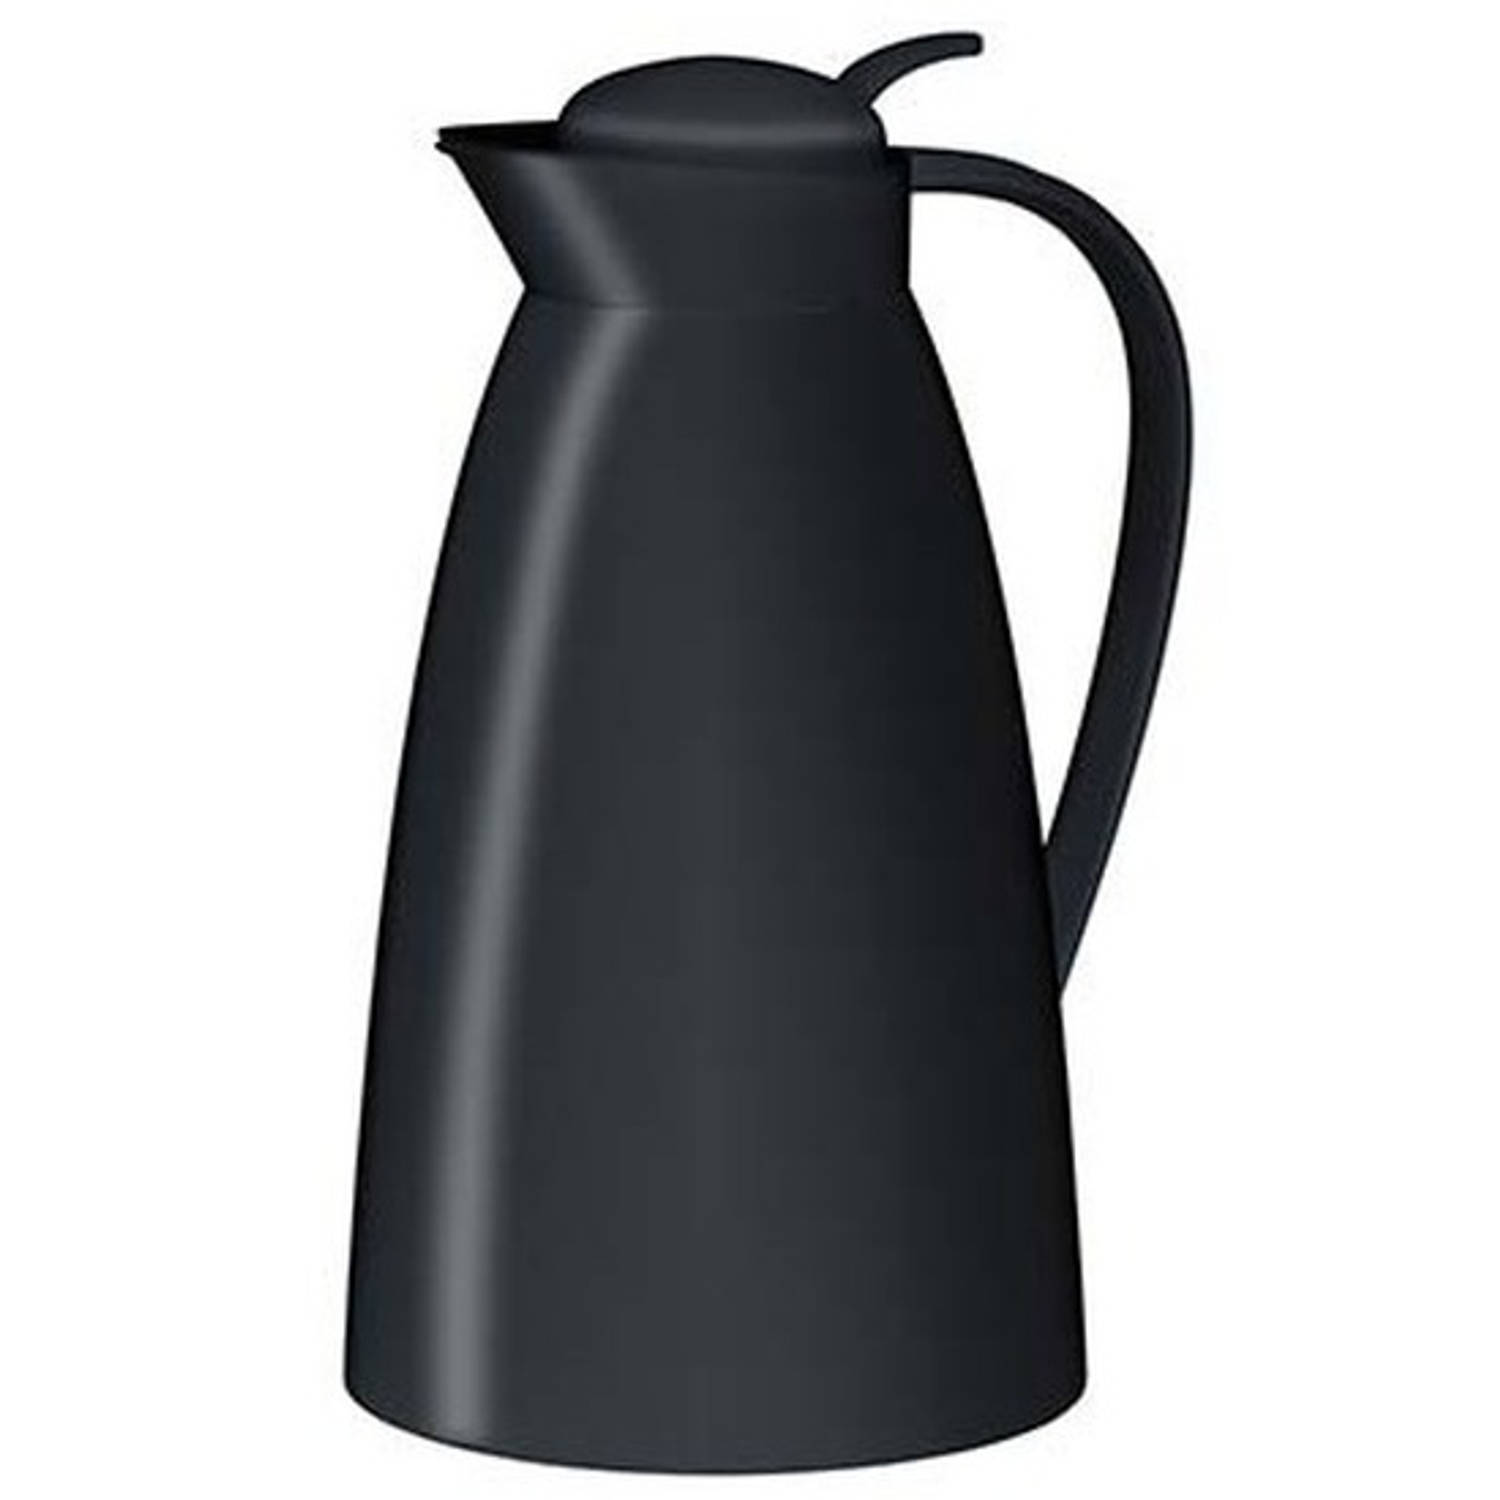 zwart liter Koffiekannen/theekannen/isoleerkannen/thermoskannen - Koffie/thee meenemen | Blokker